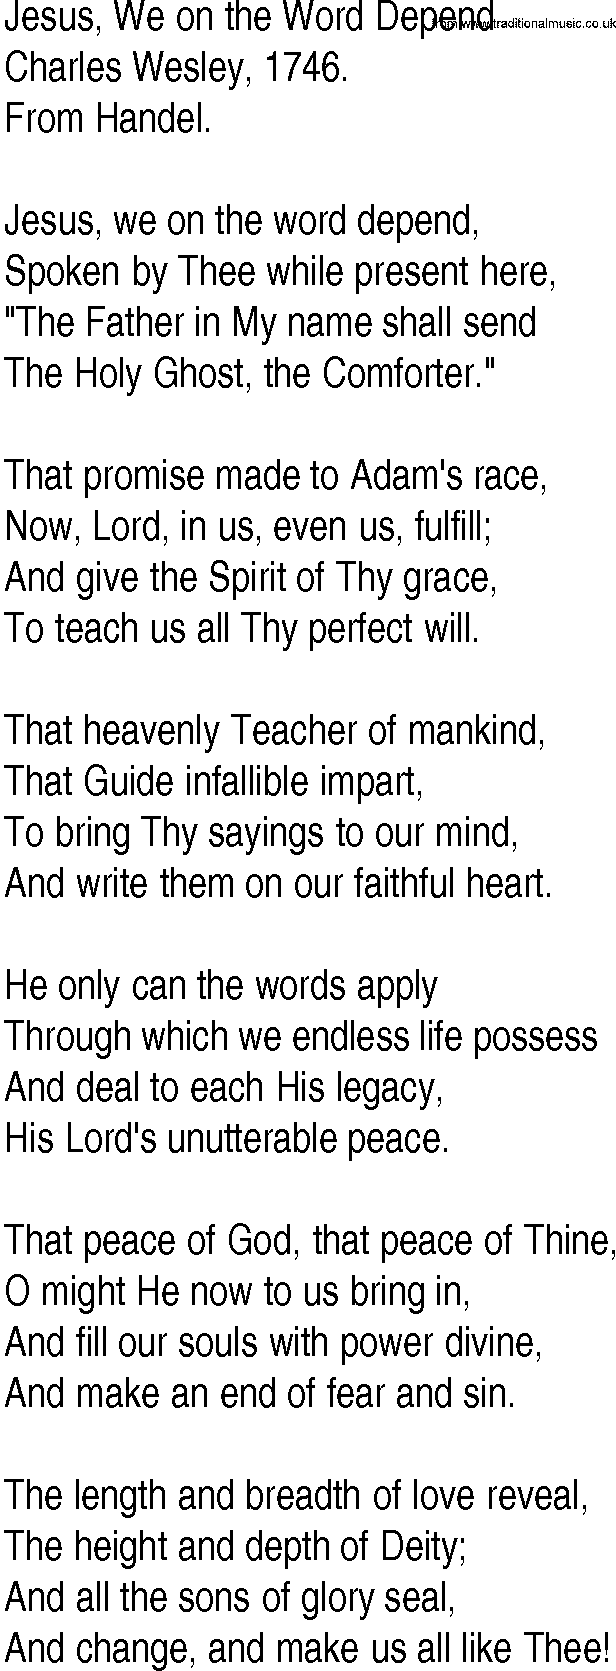 Hymn and Gospel Song: Jesus, We on the Word Depend by Charles Wesley lyrics